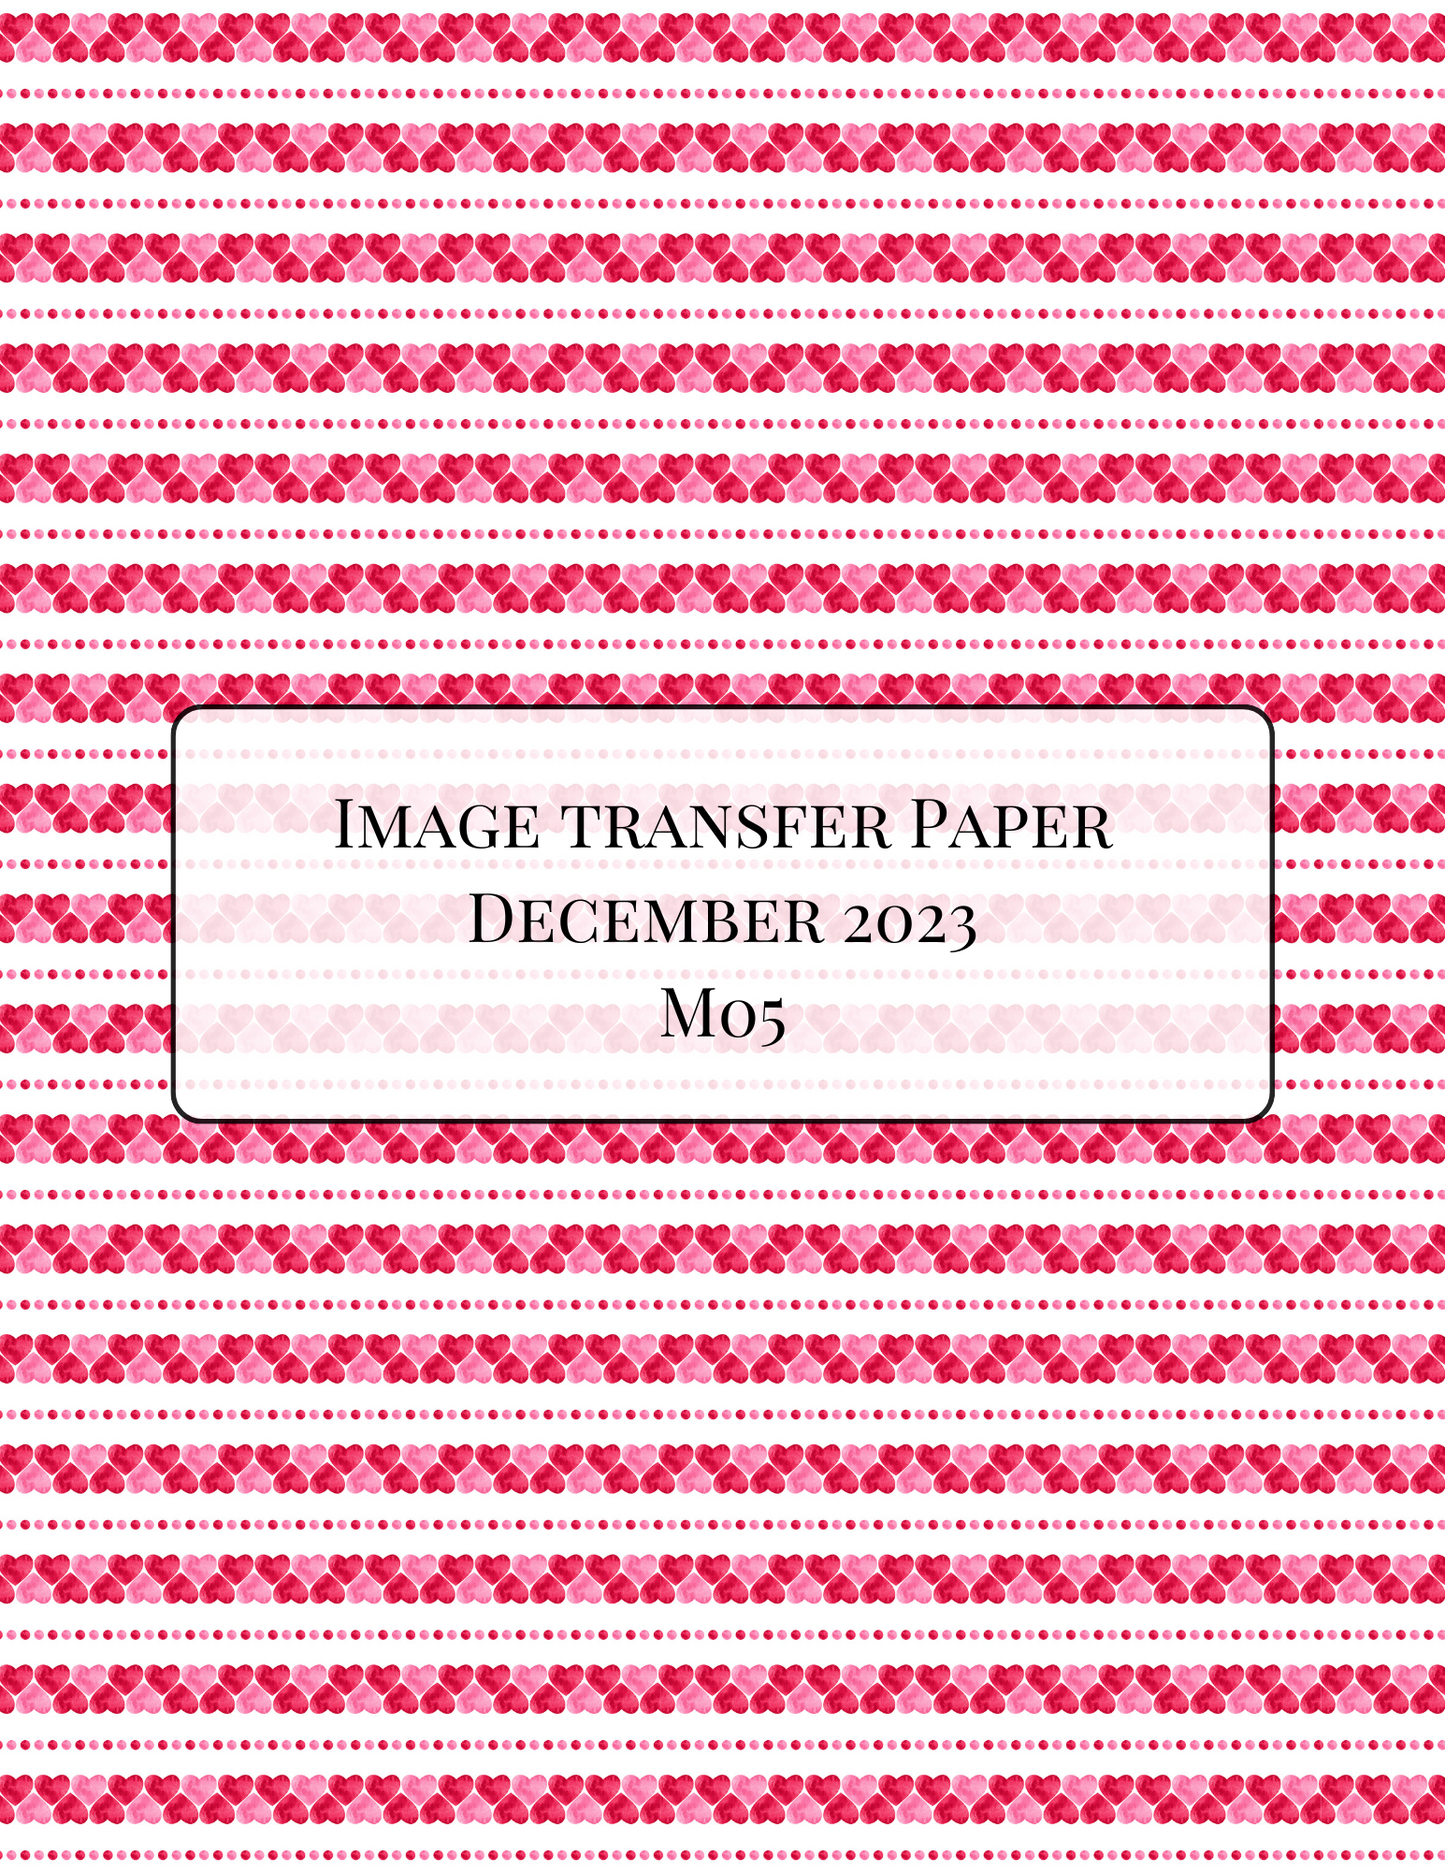 M05 Transfer Paper - December 2023 Launch